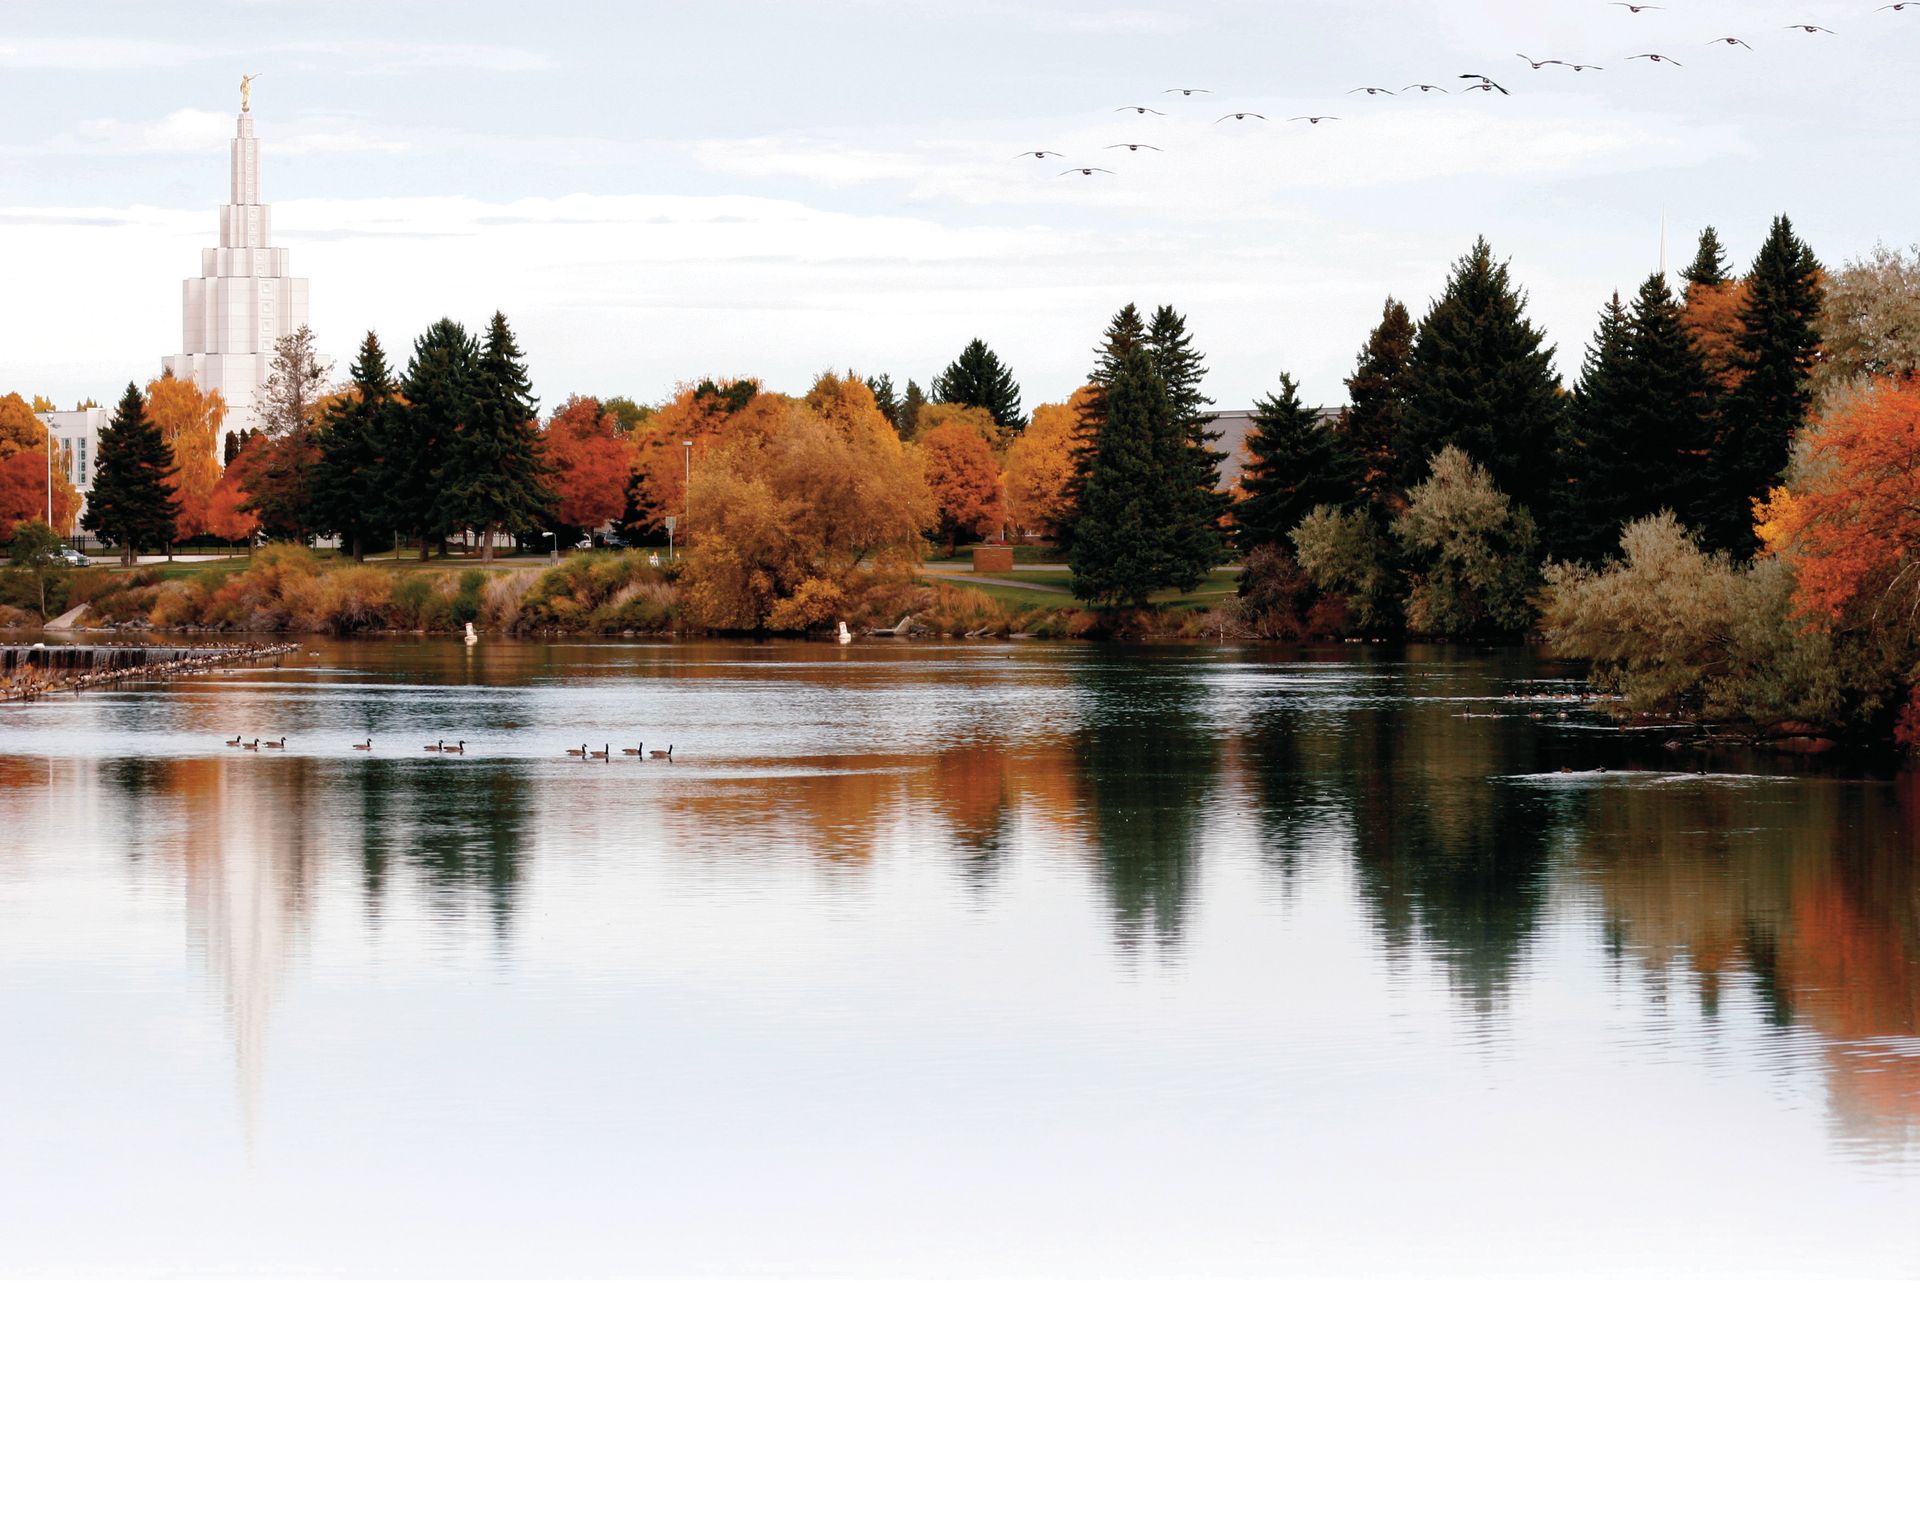 The Idaho Falls Idaho Temple in the fall, including lake and scenery.